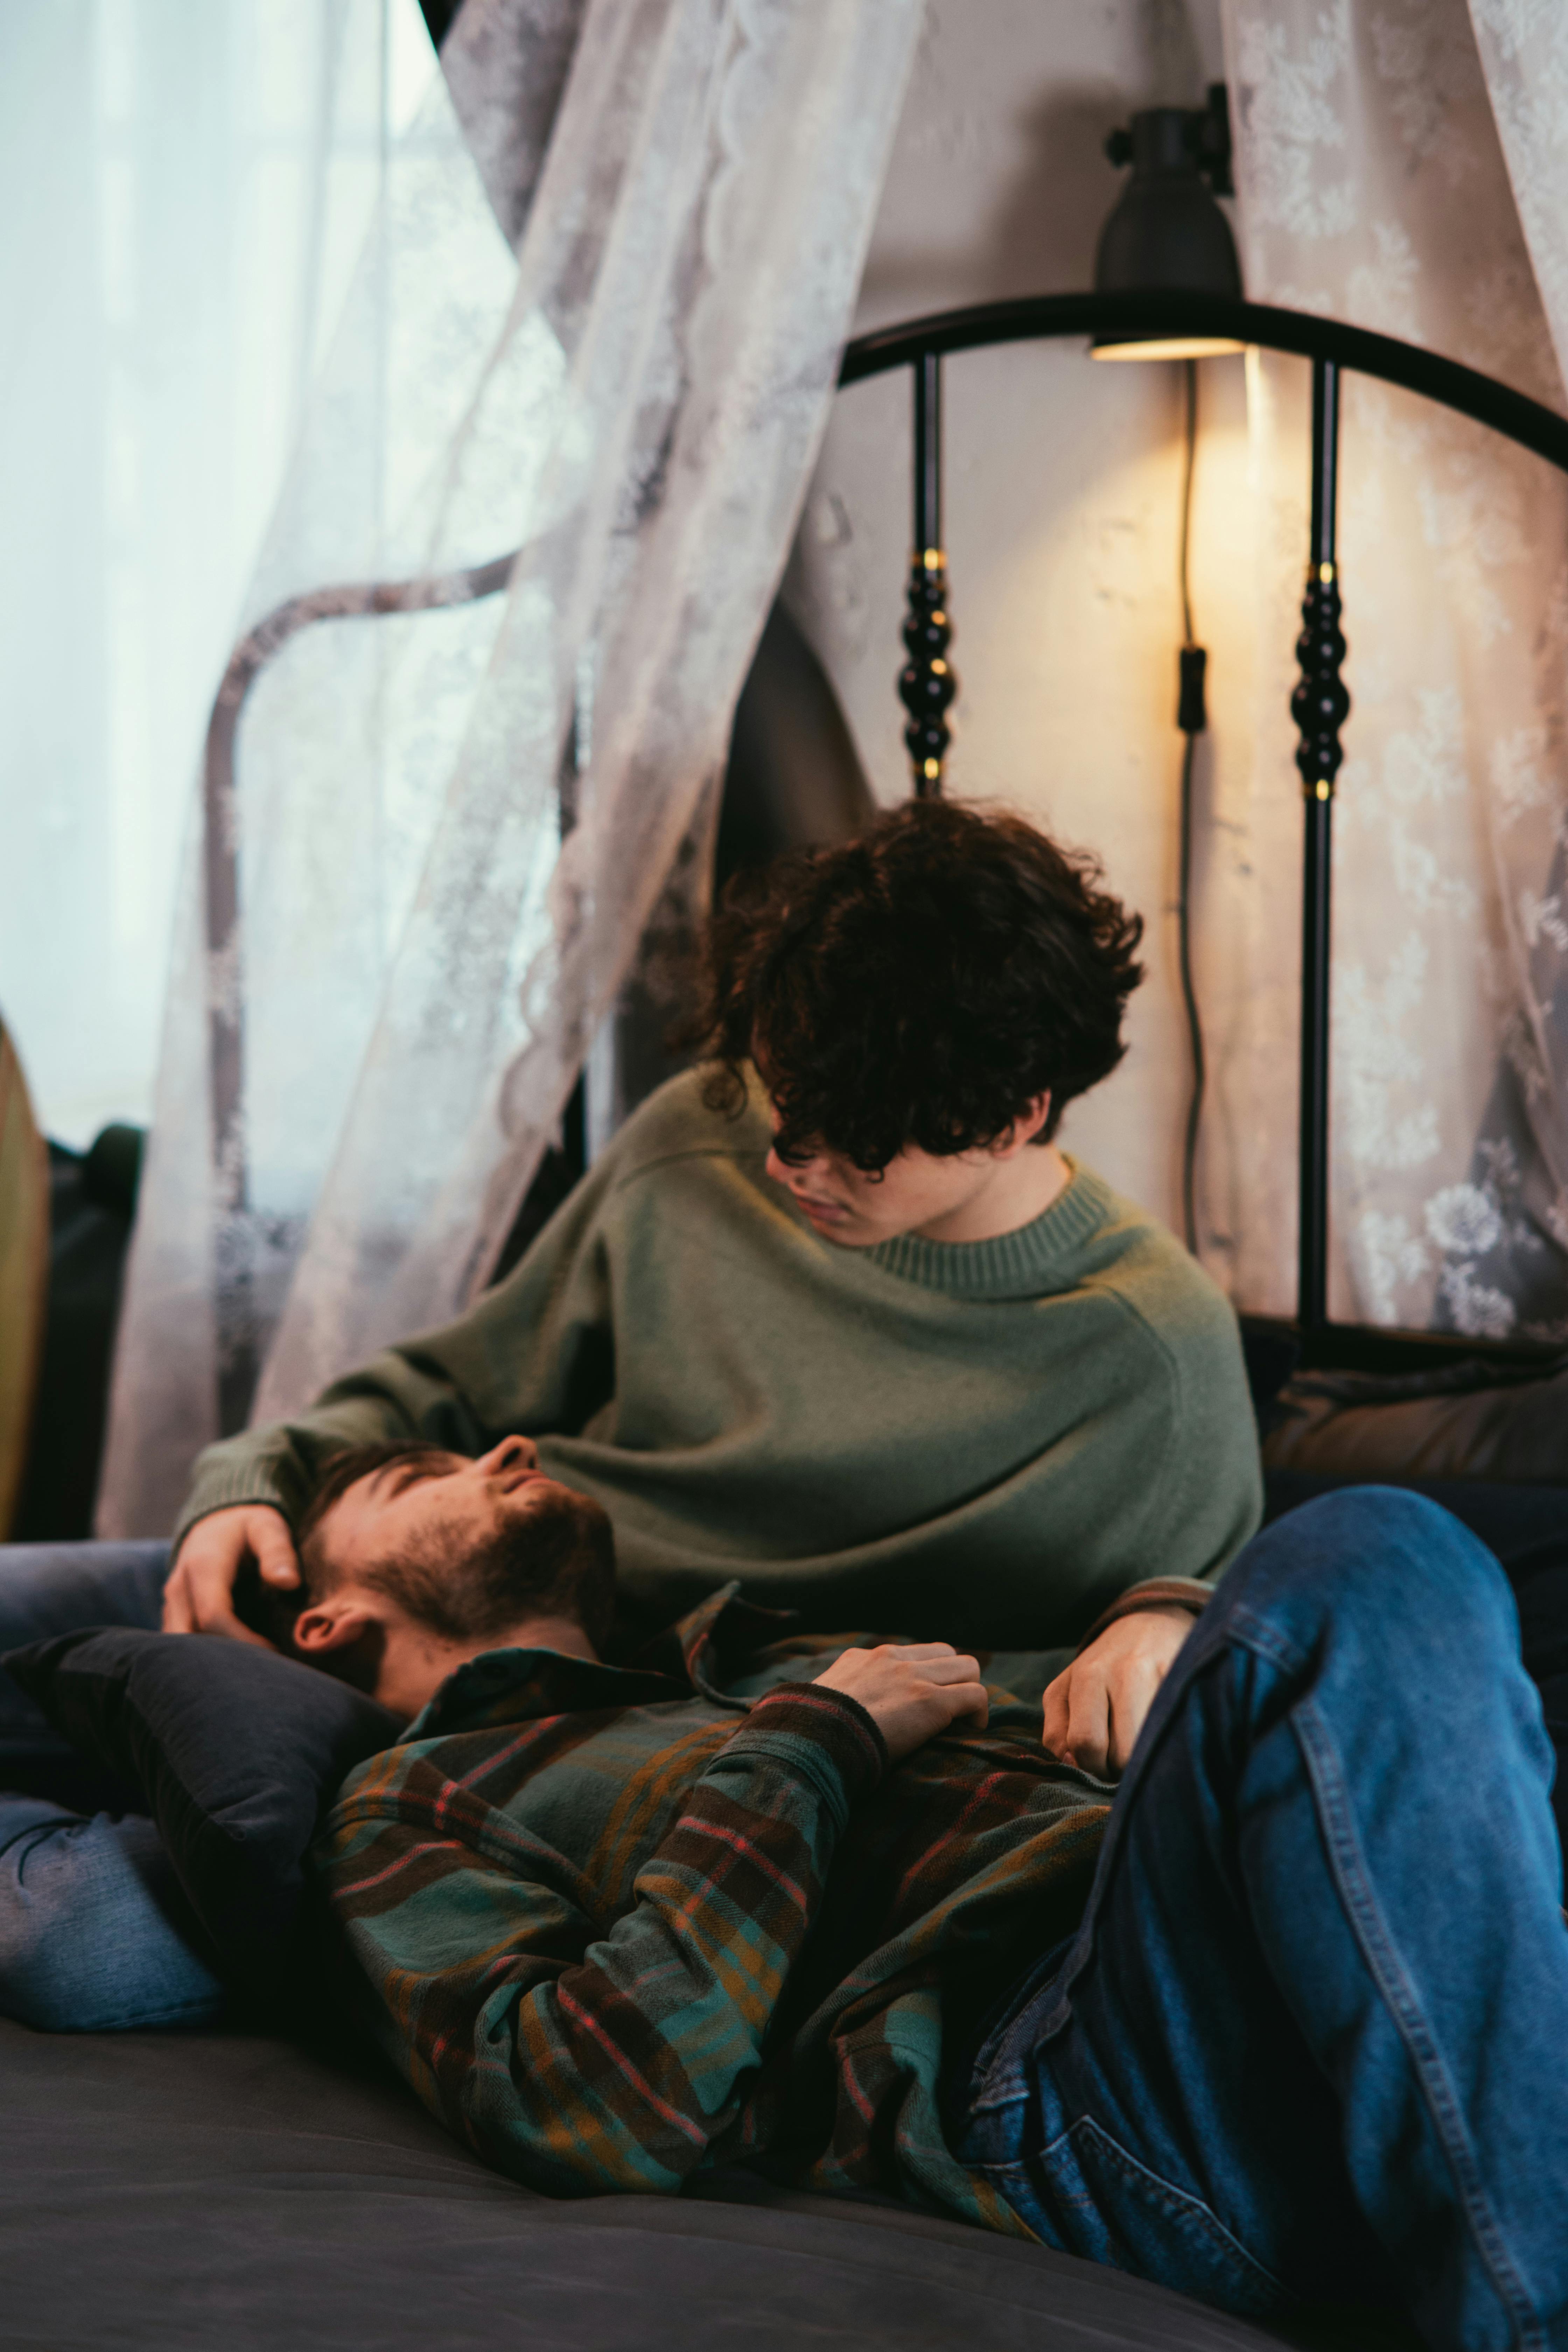 Couple talks in bed | Source: Pexels